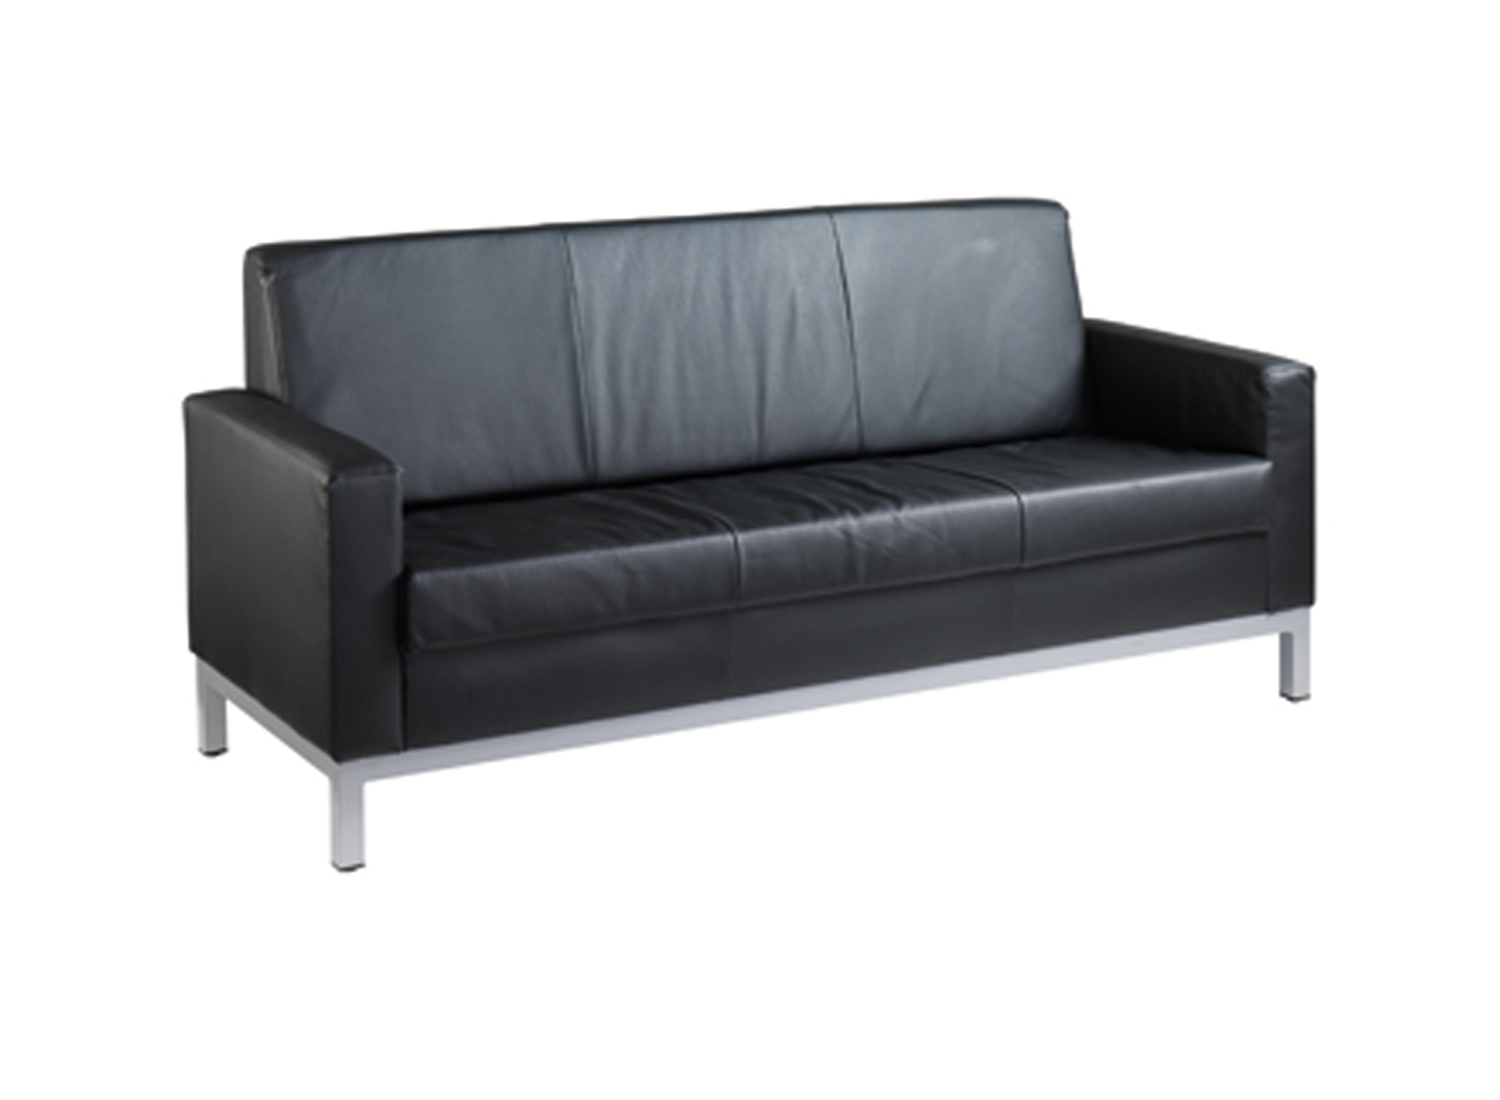 Helsinki 3 Seater Leather Sofa, Black, Fully Installed